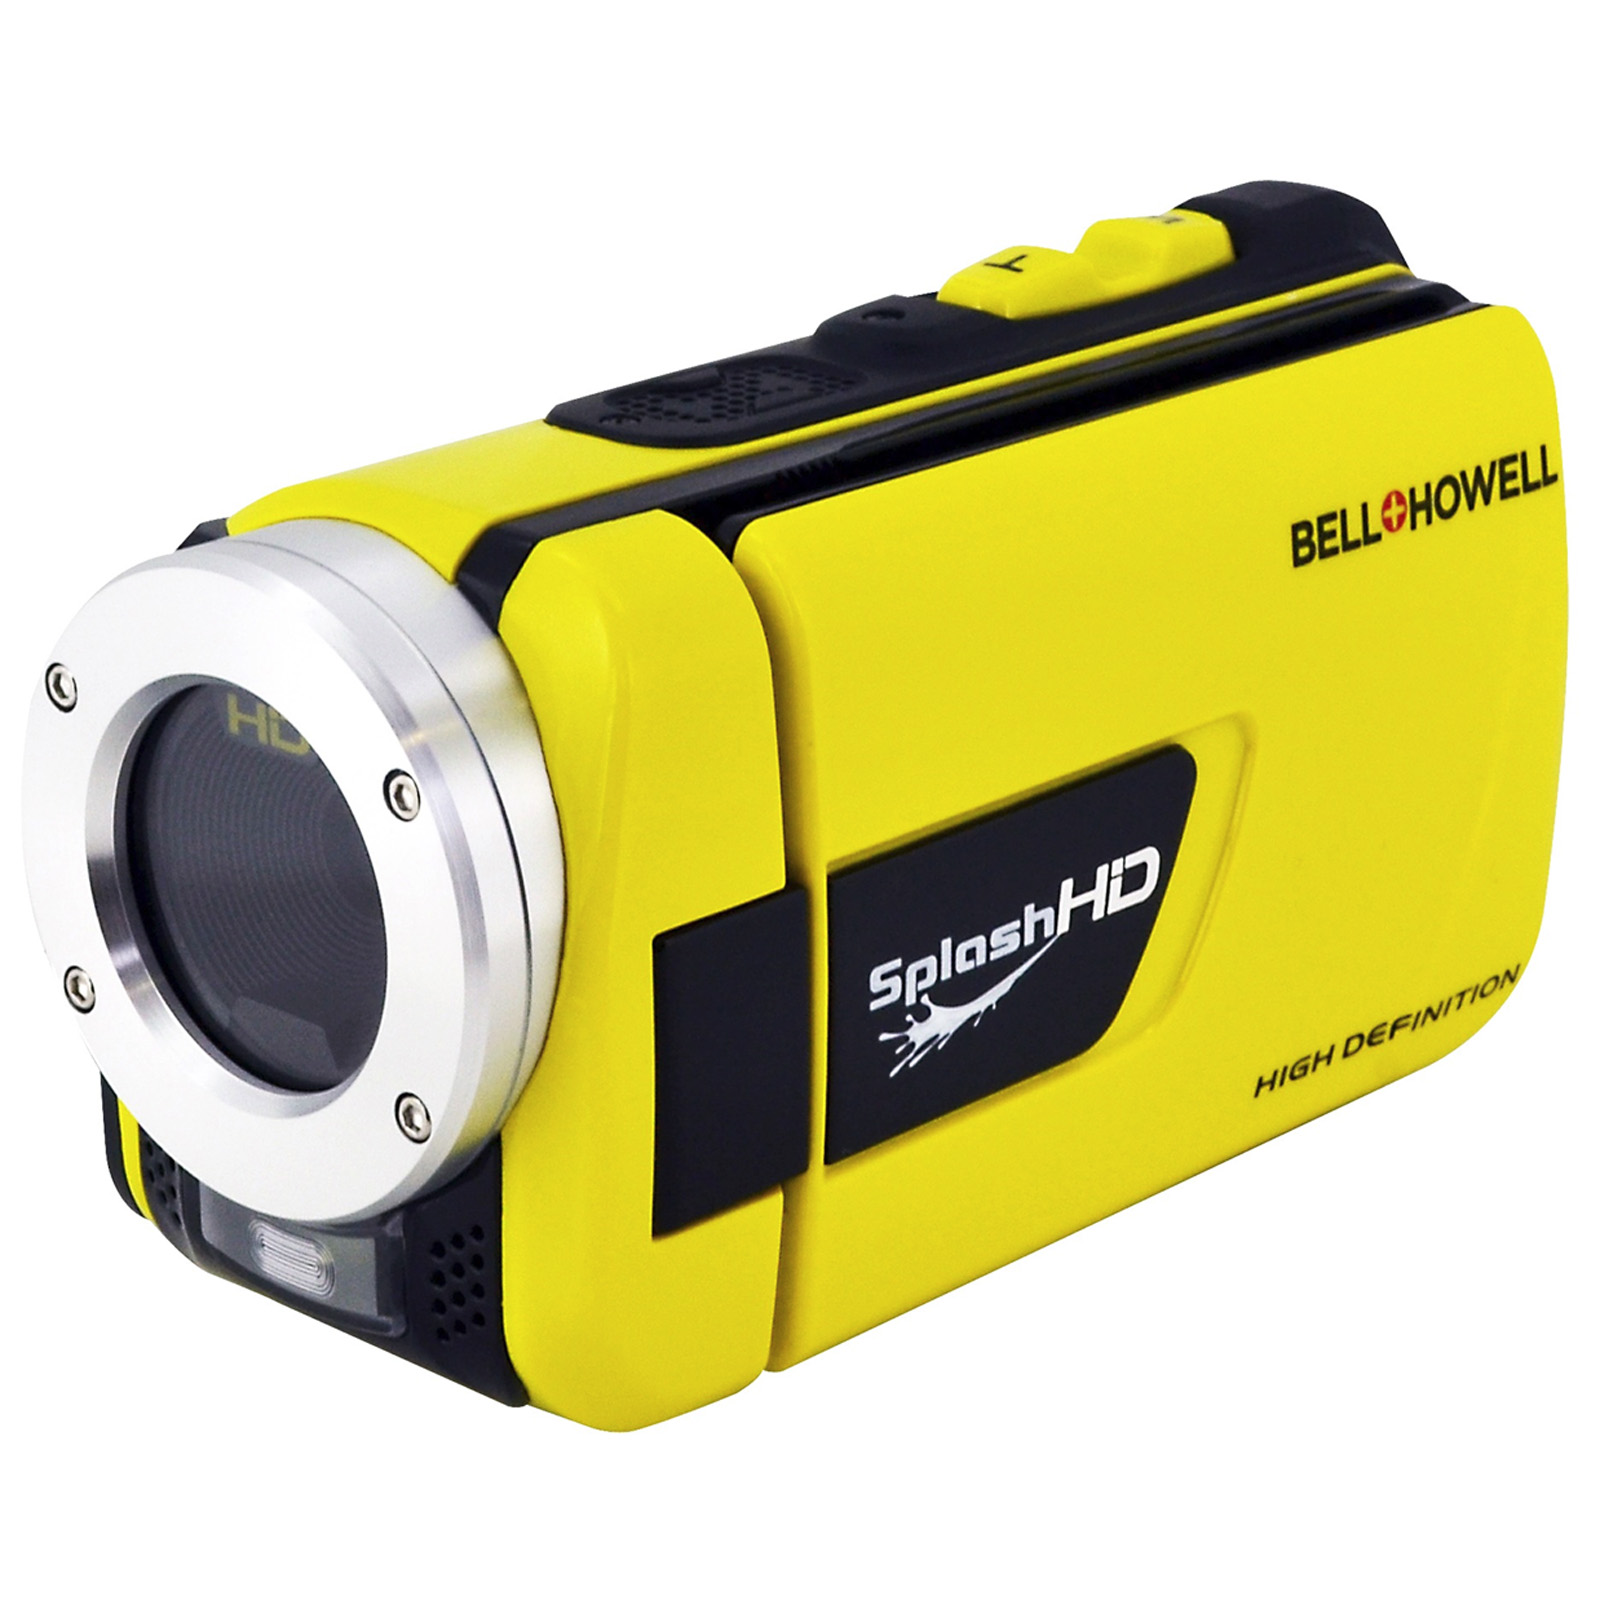 1080p HD Waterproof Camcorder (Yellow)